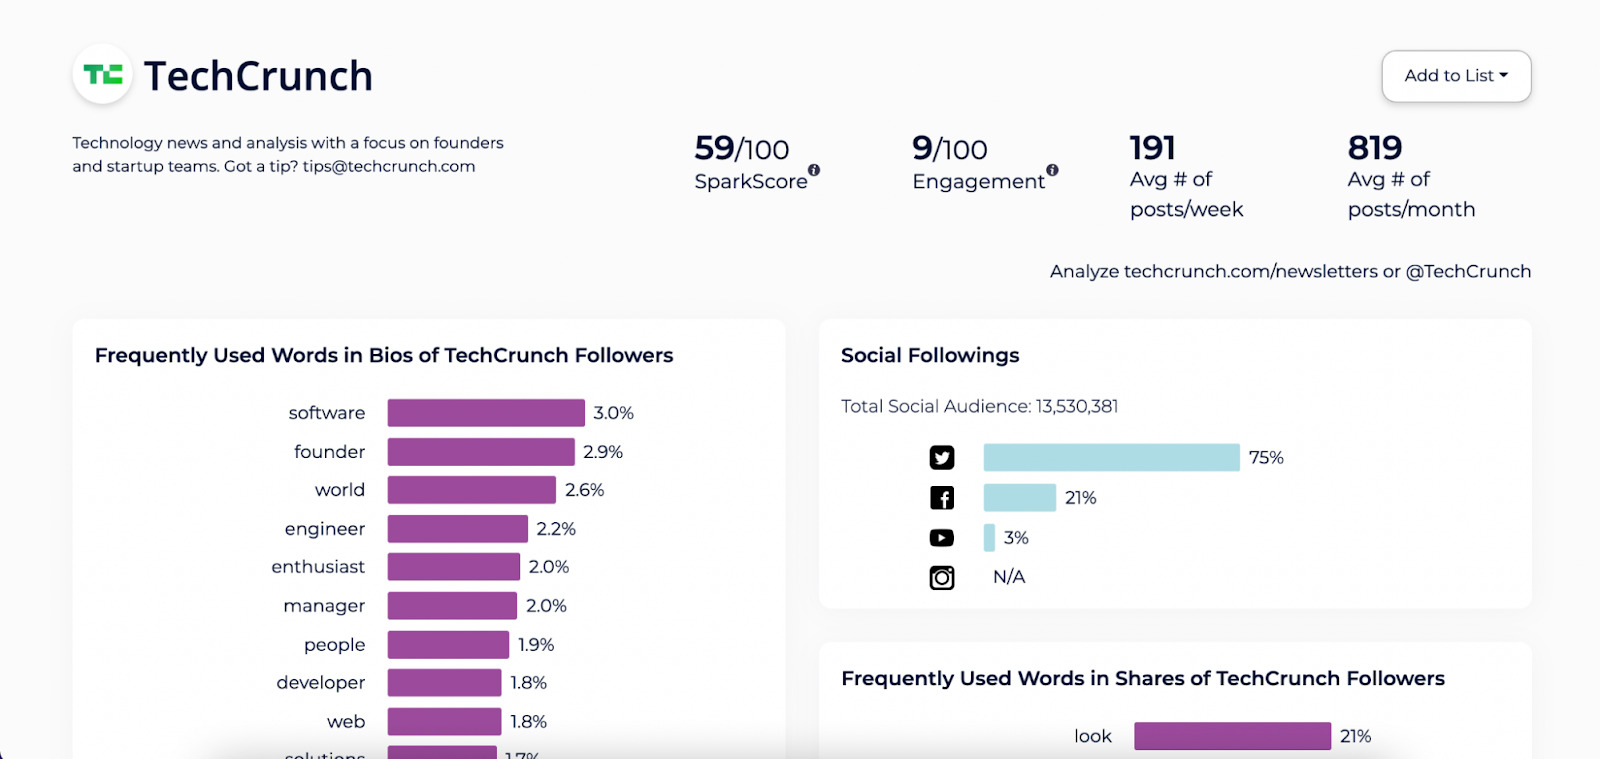 Report on TechCrunch. Key data above. Below, bar graph showing social followings, etc